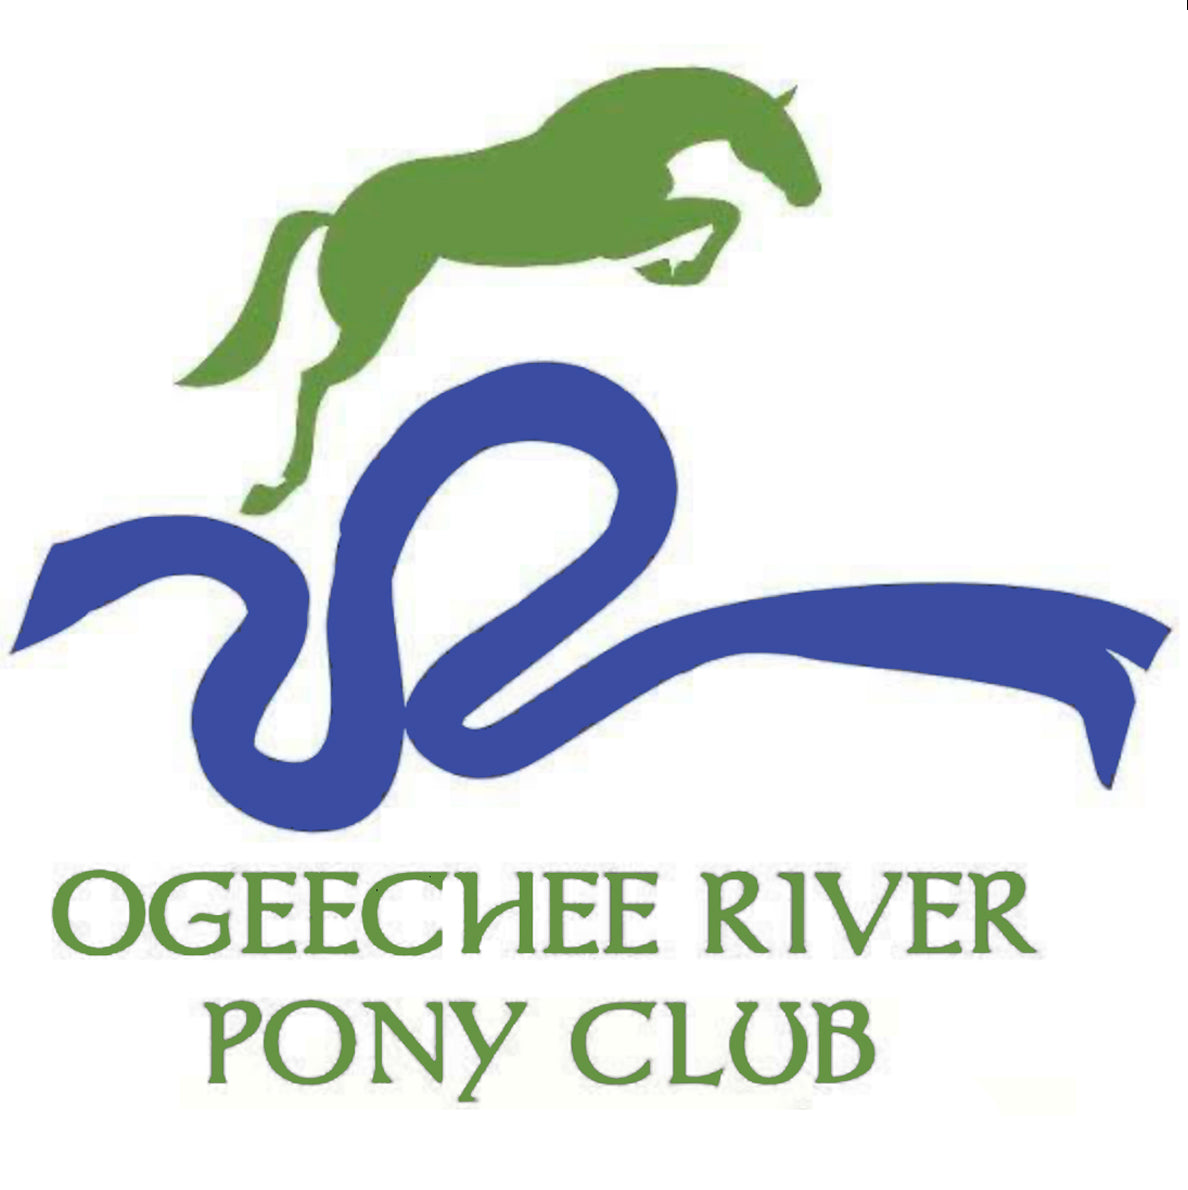 Ogeechee River Pony Club – It's A Haggerty's Teams